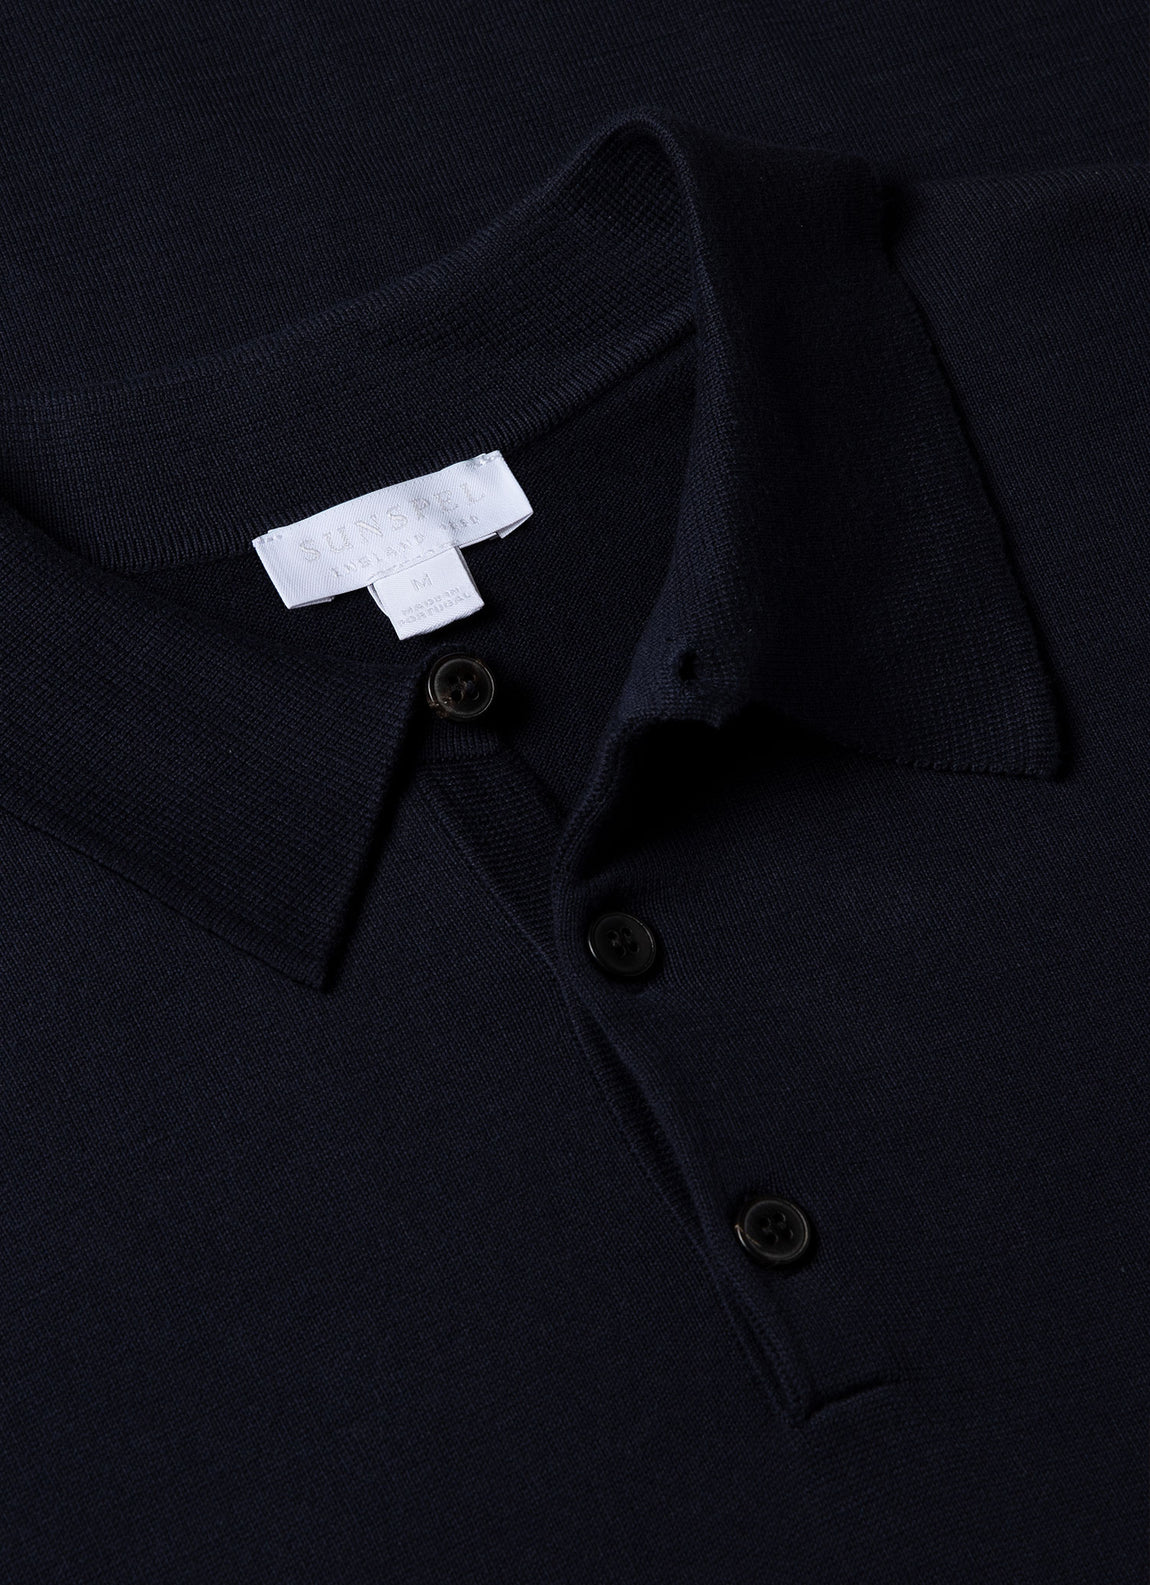 Men's Sea Island Cotton Polo Shirt in Light Navy | Sunspel